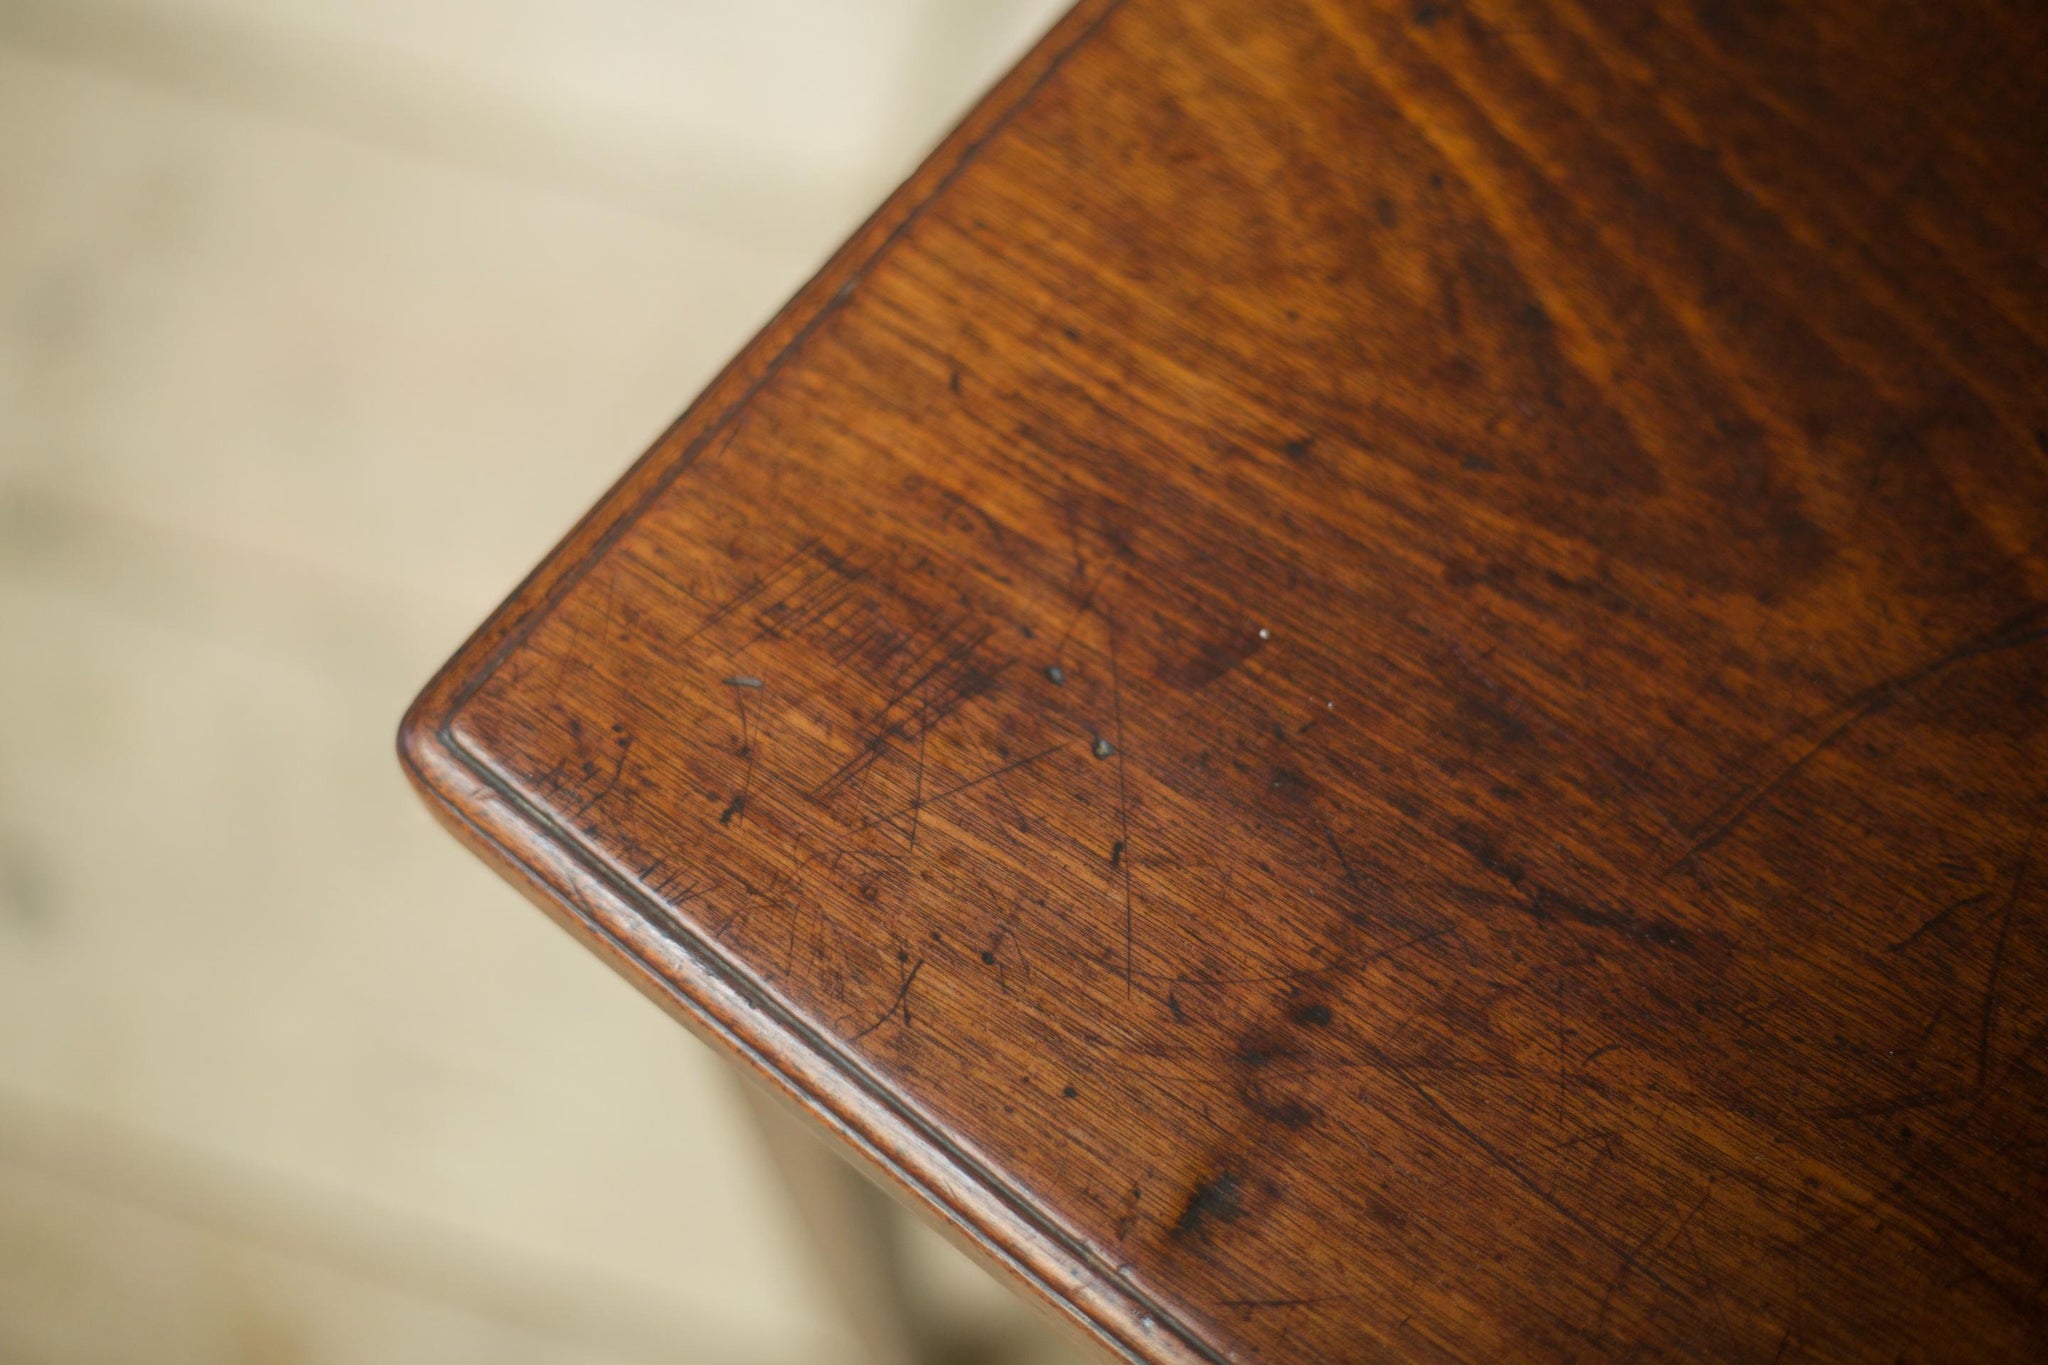 Georgian mahogany single drawer writing table